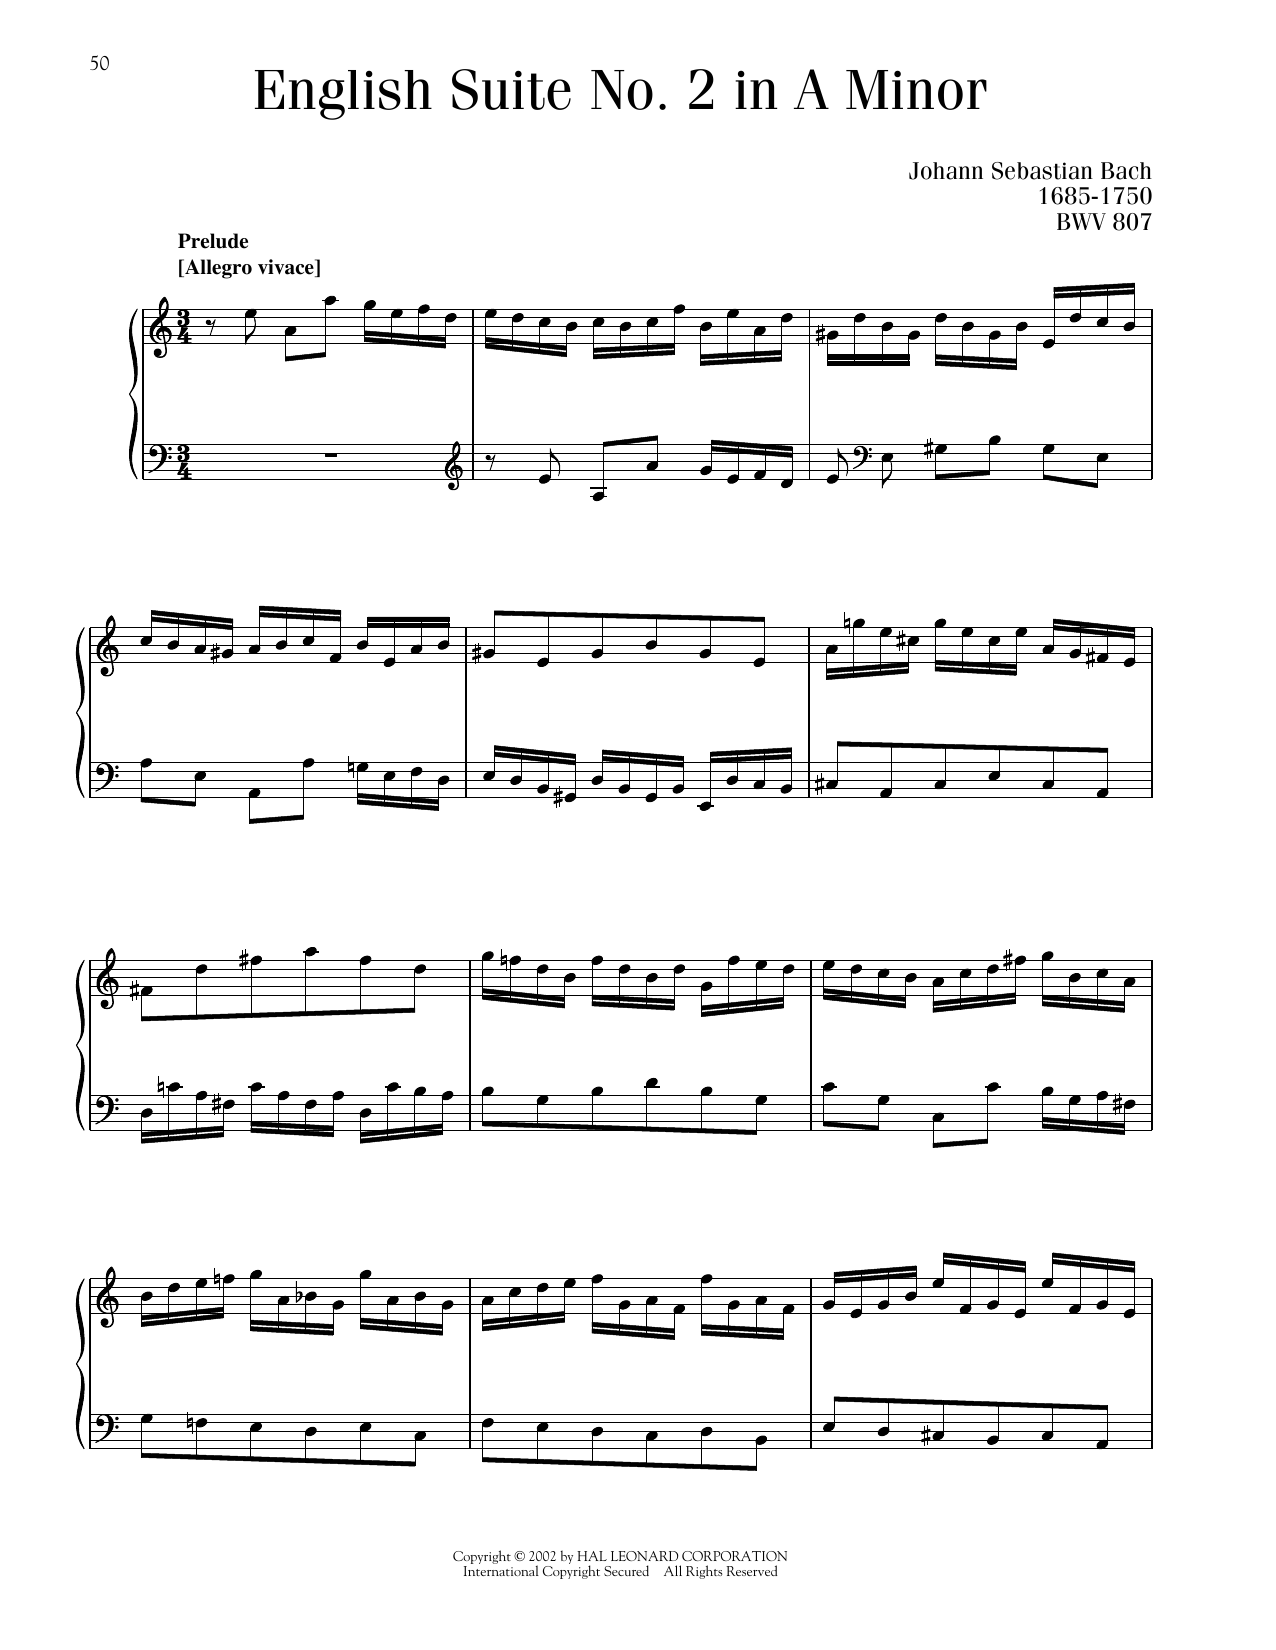 Johann Sebastian Bach English Suite No. 2, BWV 807 sheet music notes printable PDF score